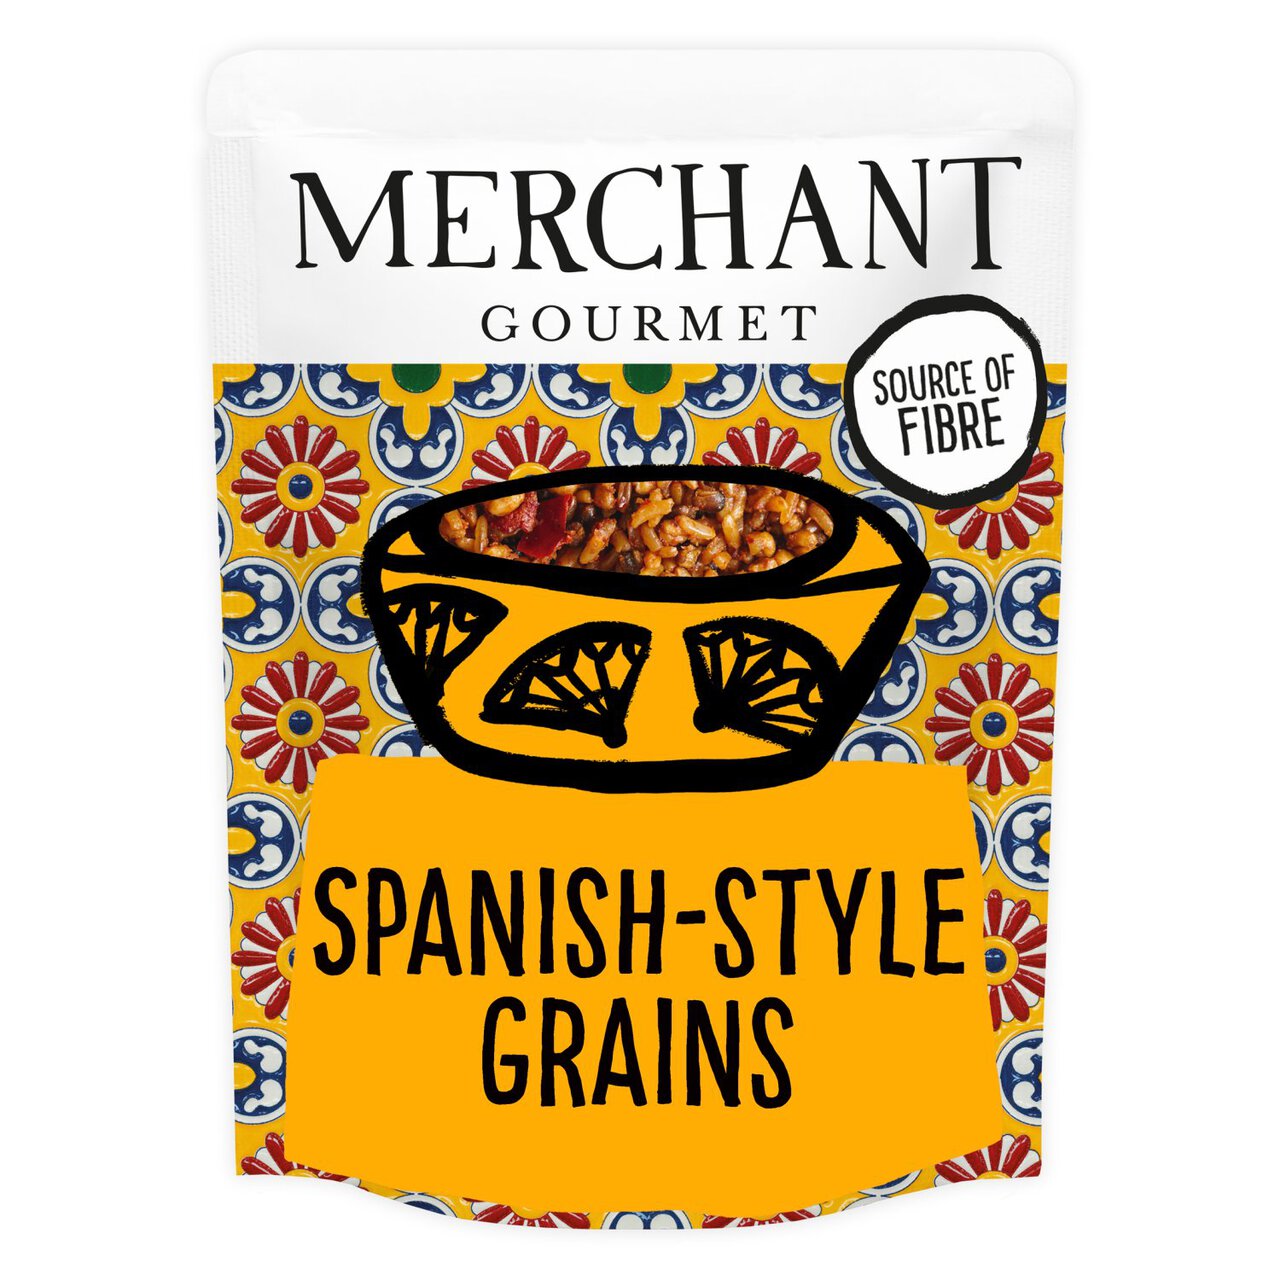 Merchant Gourmet Spanish-Style Grains & Rice 250g